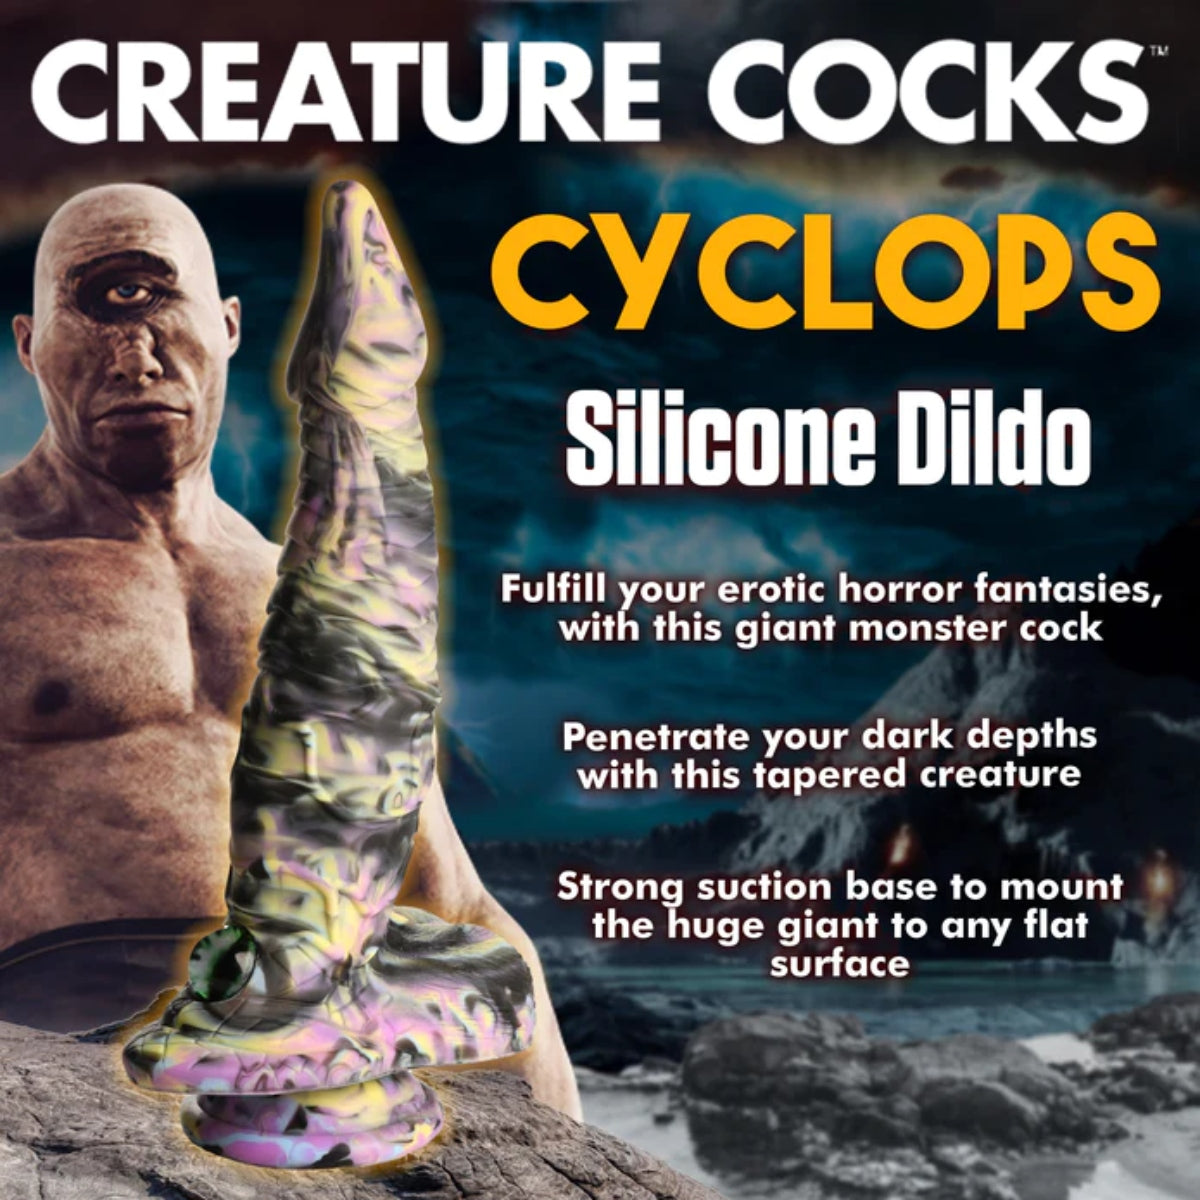 Creature Cocks Cyclops Monster Silicone Dildo (8274281693423)